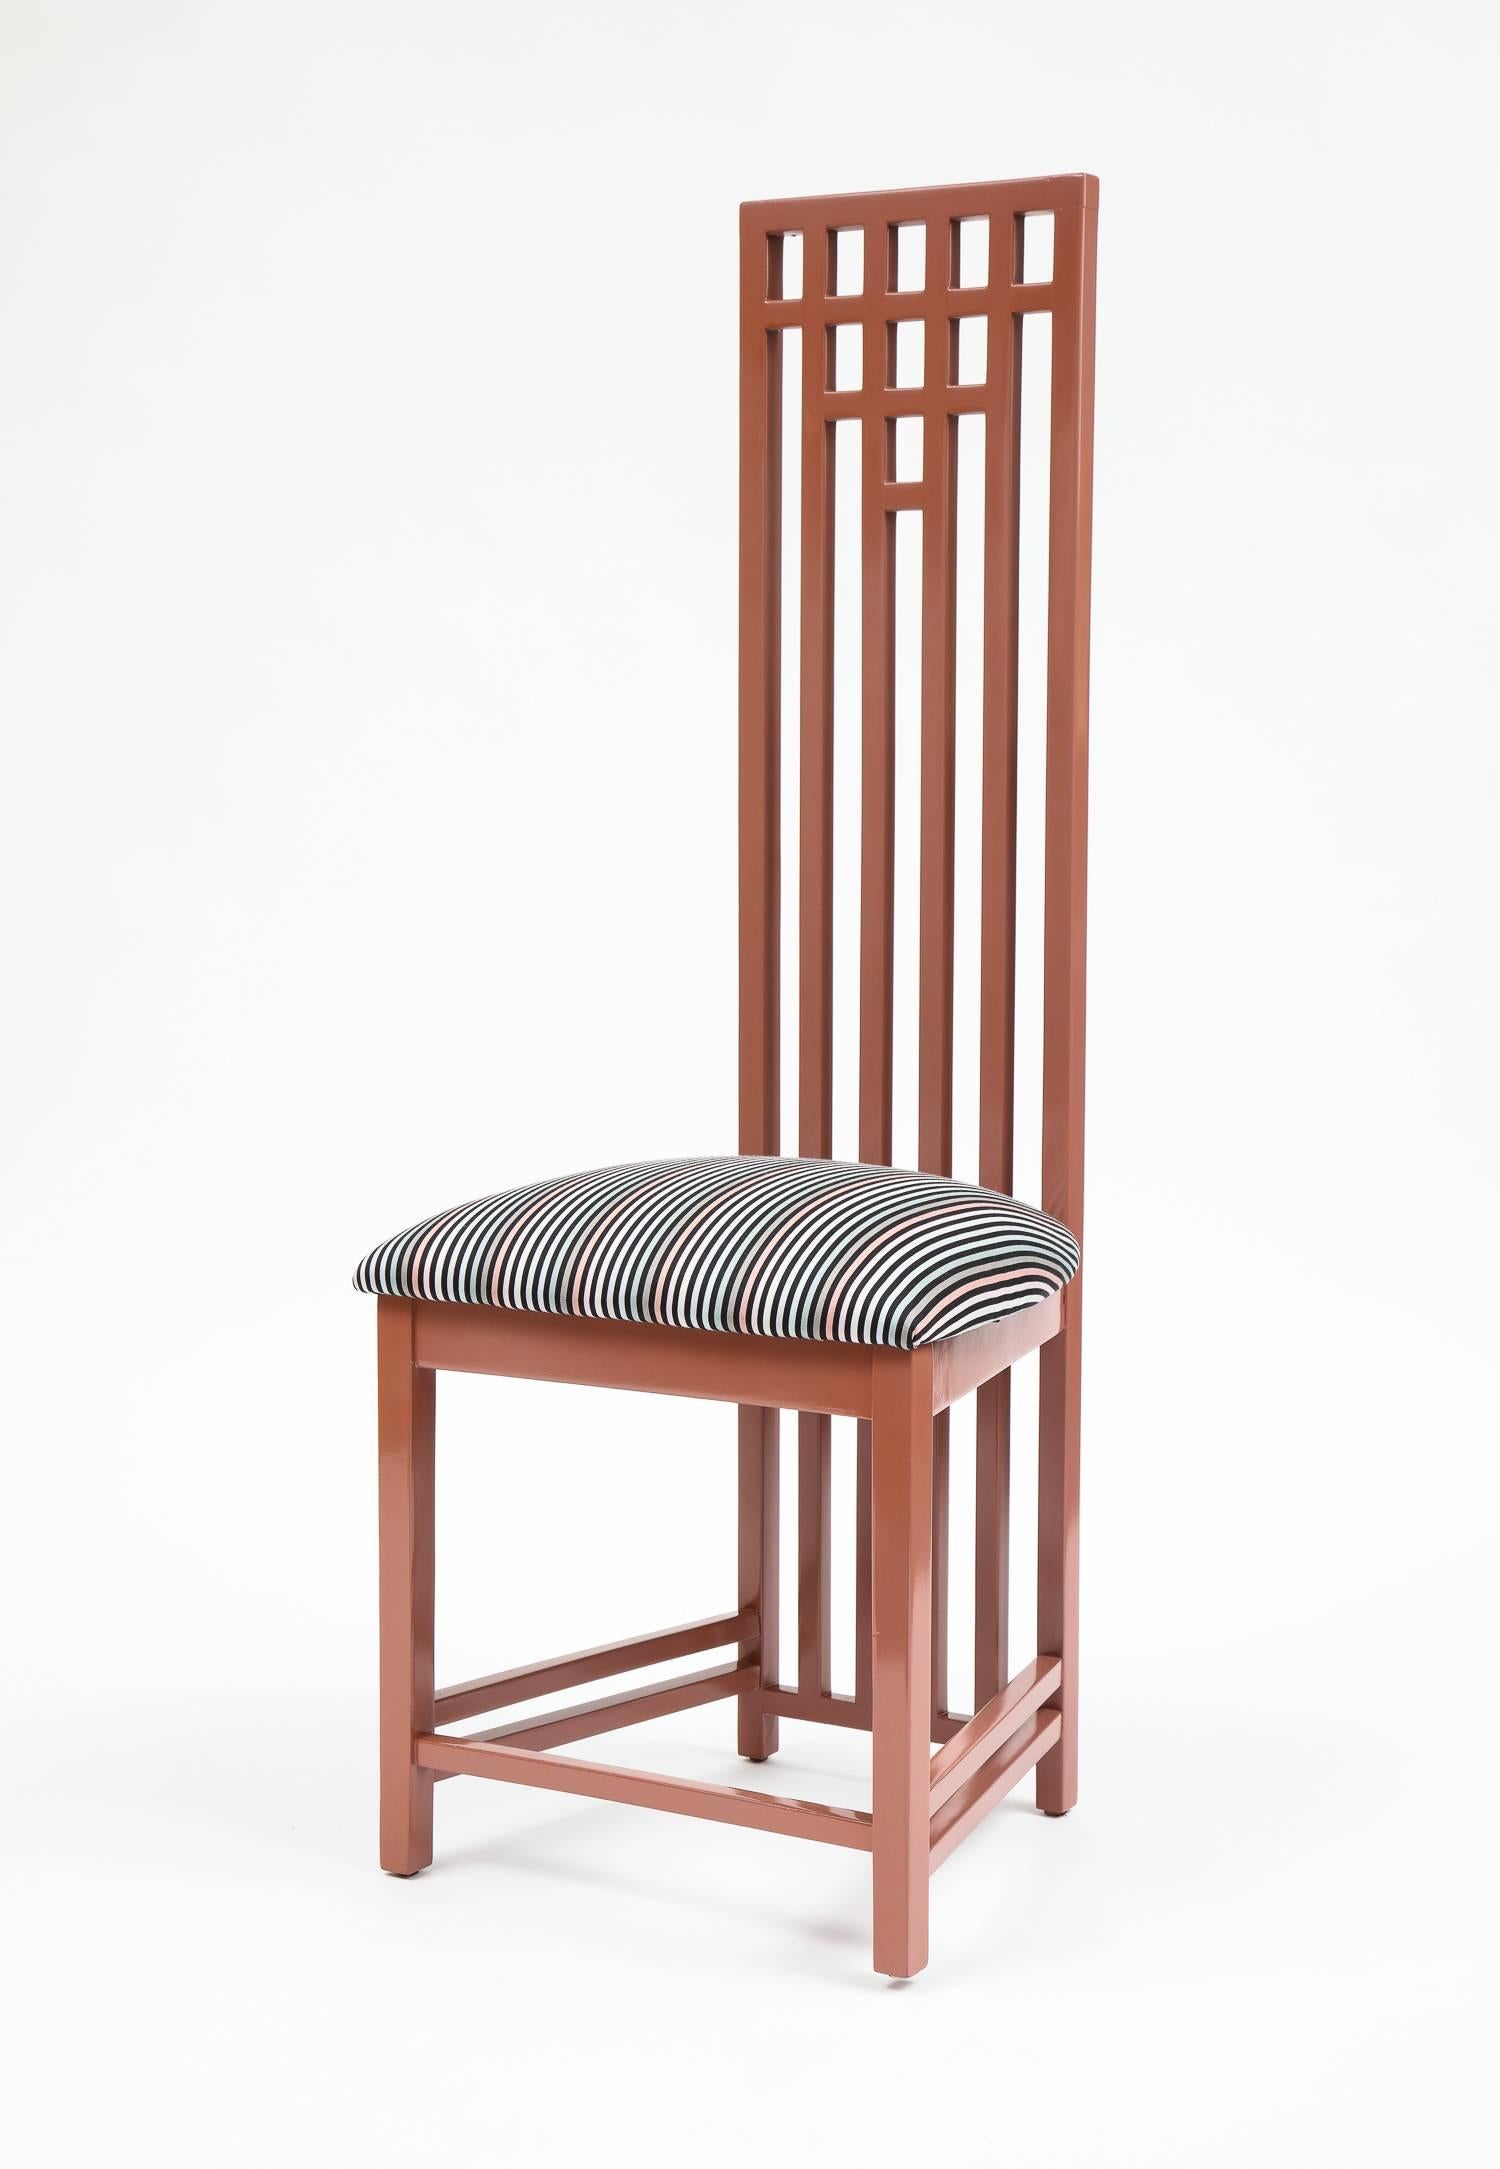 Charles Rennie Mackintosh dining chairs in Sonia Rykiel fabric, set of six

Iconic Mackintosh design with new upholstery in Sonia Rykiel fabric.

Measures: Seat height 18.75''.